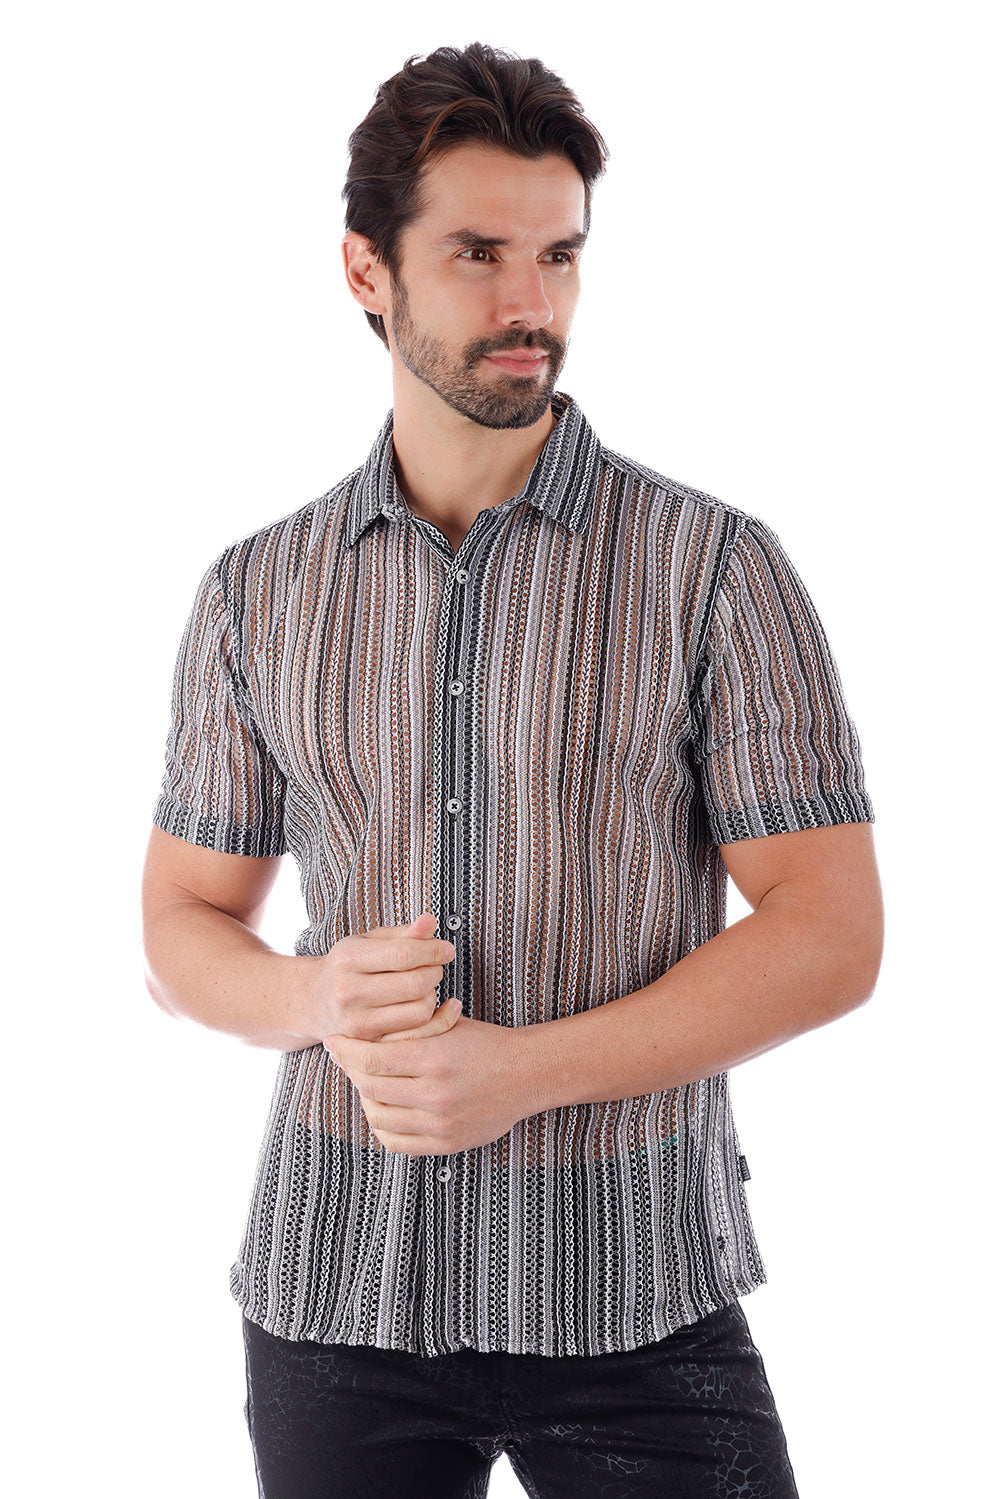 BARABAS Men's Knit Stretch Button Down Short Sleeve Shirts 4SST03 Grey